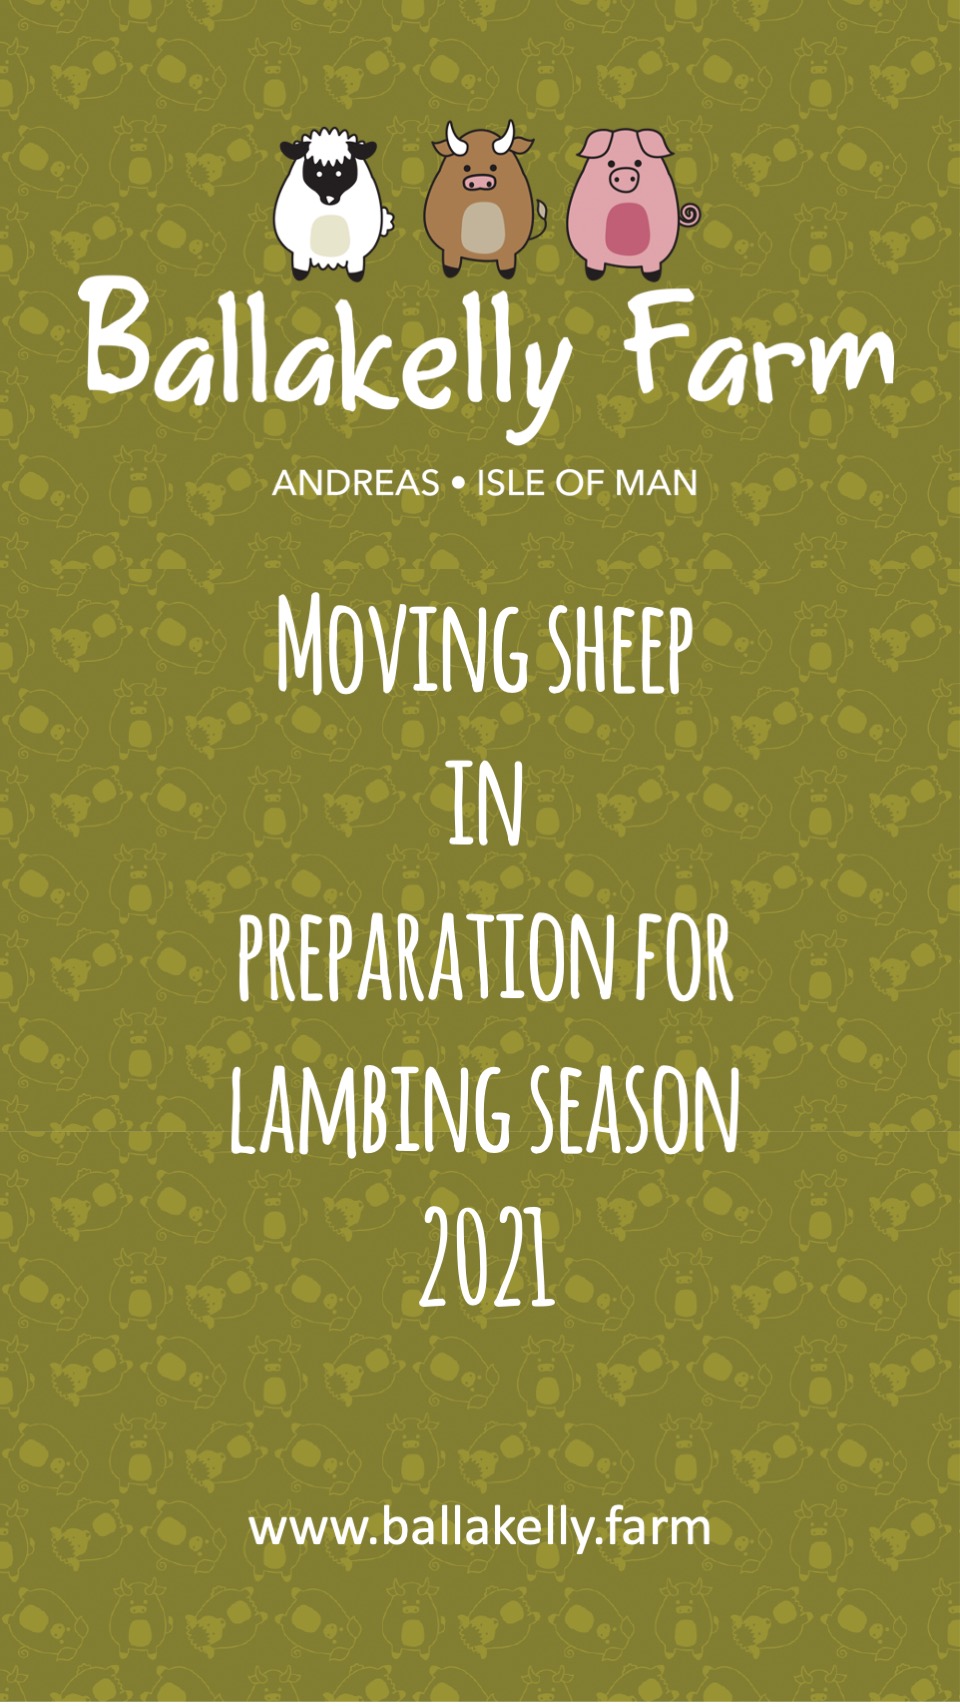 Moving Sheep for lambing season 2021